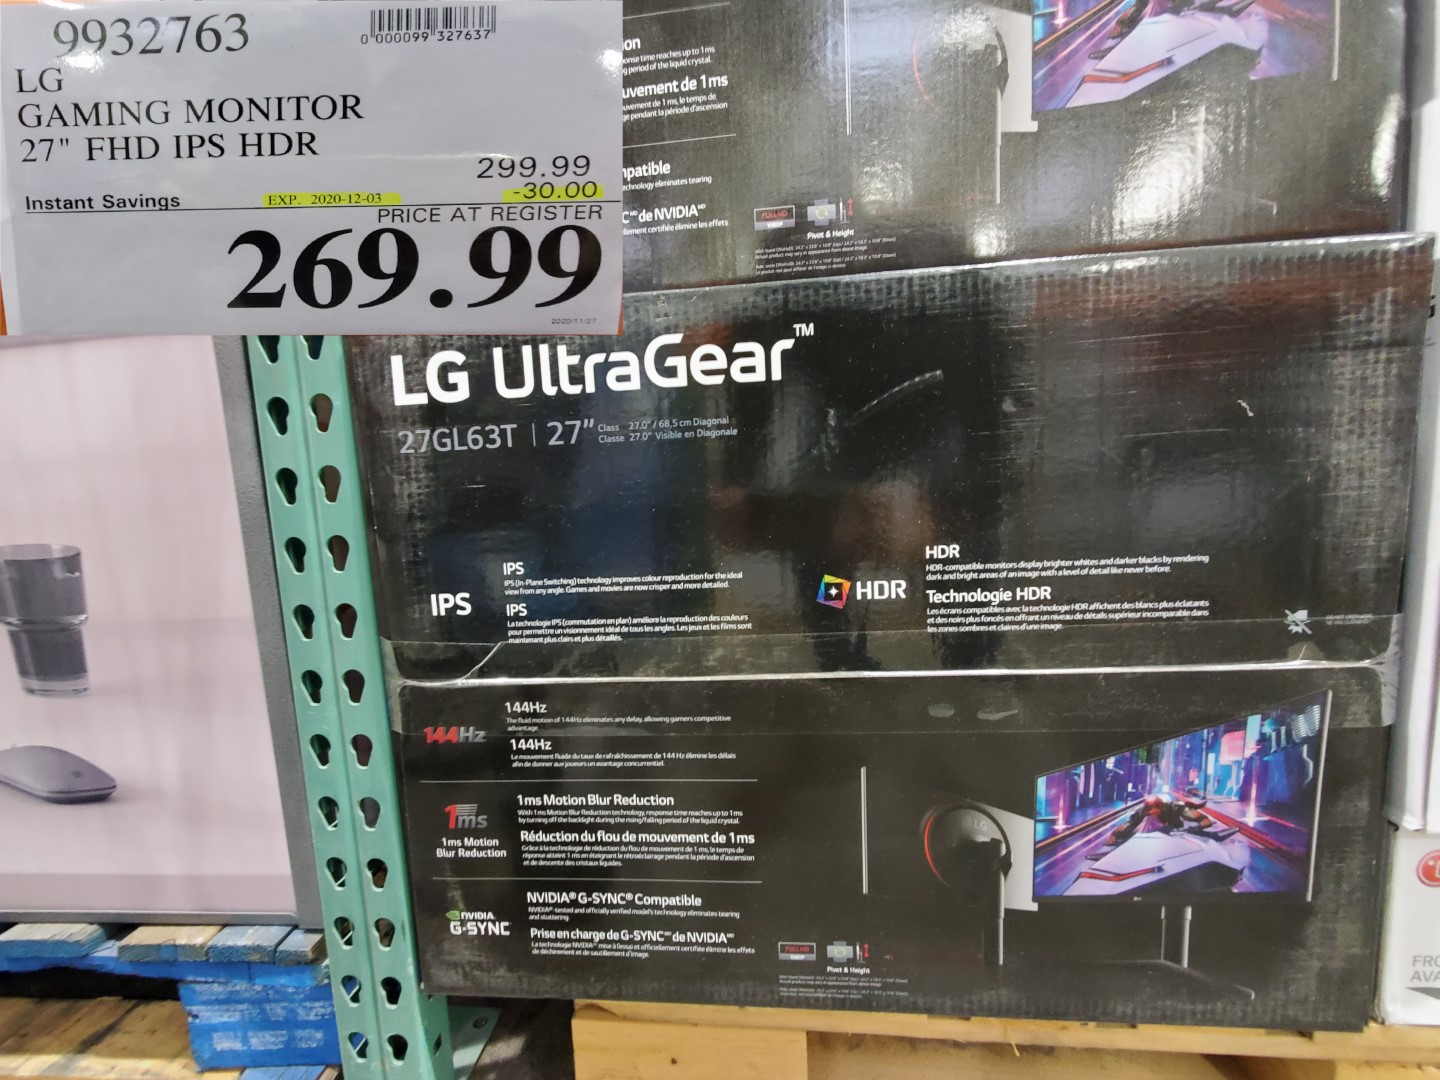 LG ultragear gaming monitor